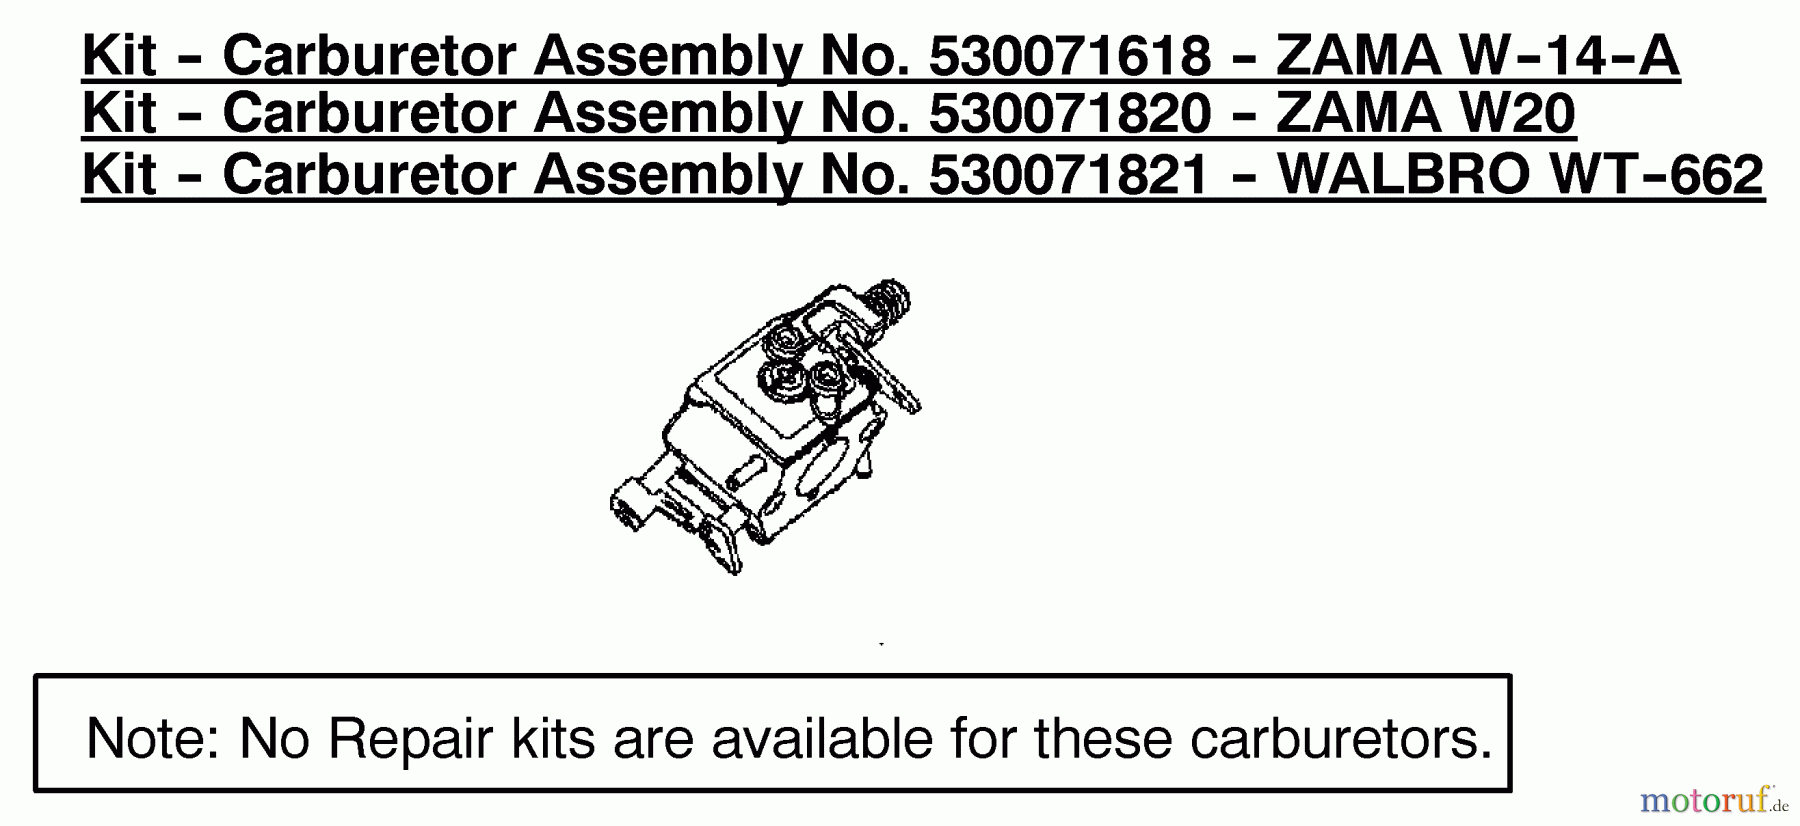  Poulan / Weed Eater Motorsägen 1975 (Type 3) - Poulan Woodshark Chainsaw Carburetor Assembly (Walbro WT-662) P/N 530071821